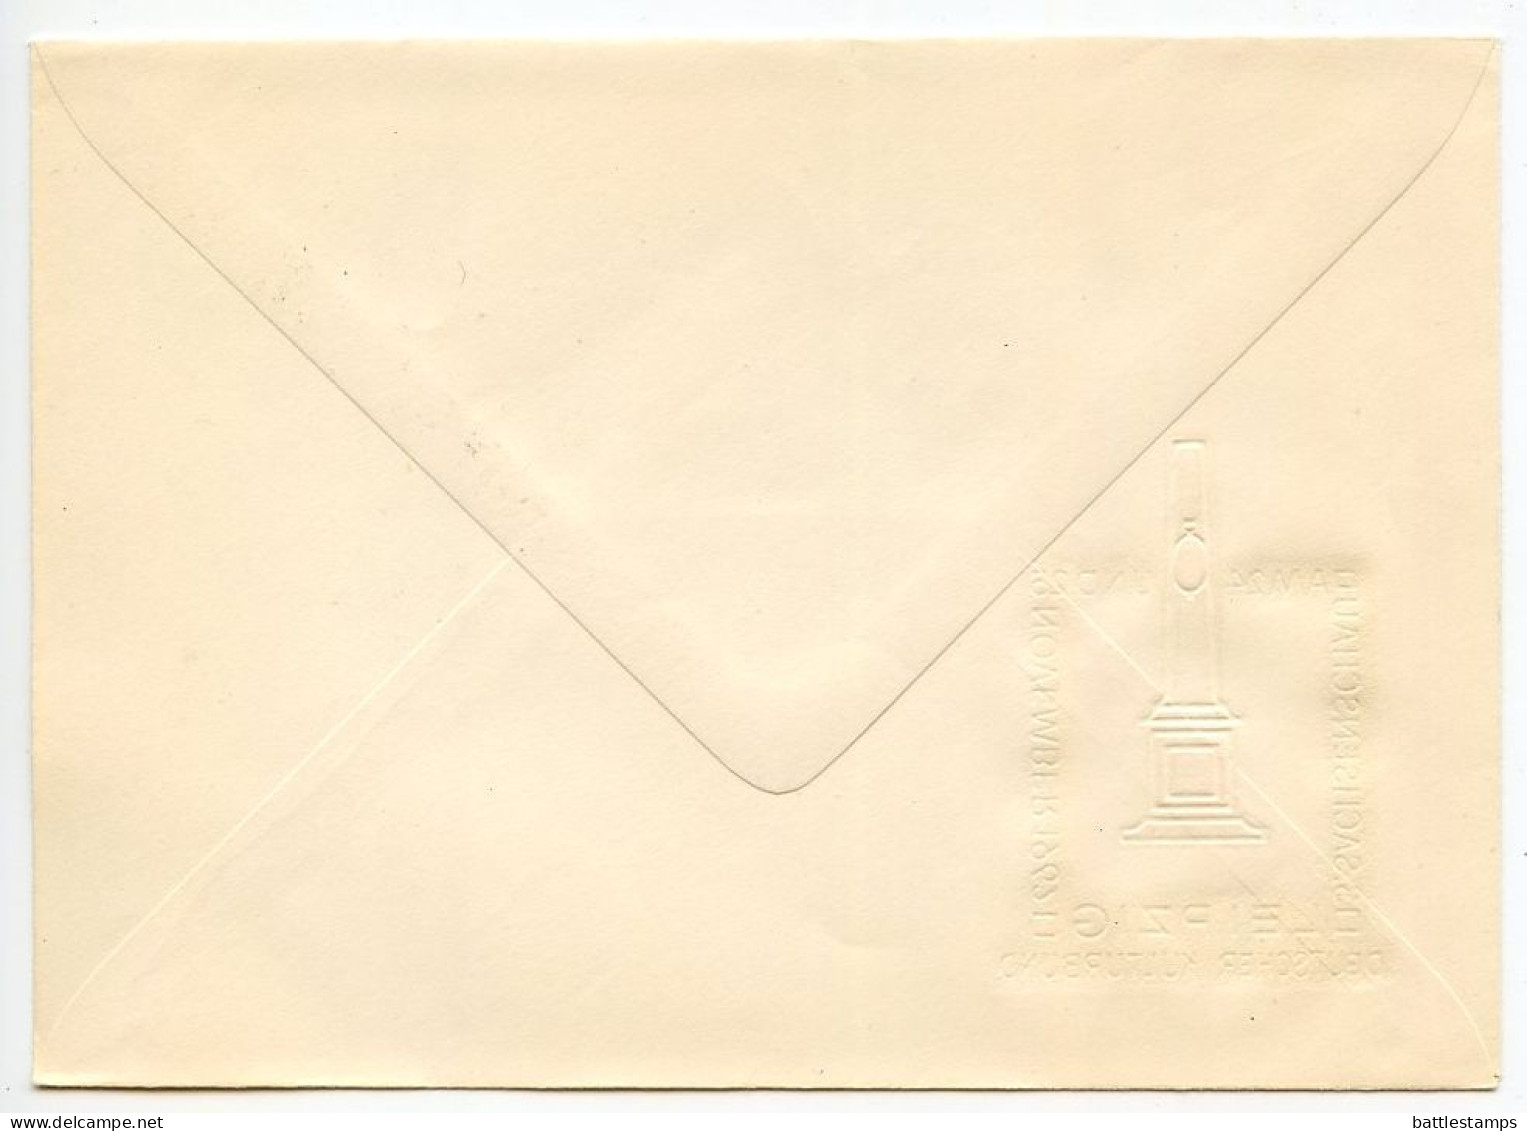 Germany, East 1962 10pf. Wartburg Postal Envelope; Leipzig 3. Sachsenschau Postmark & Cachet - Enveloppes - Oblitérées